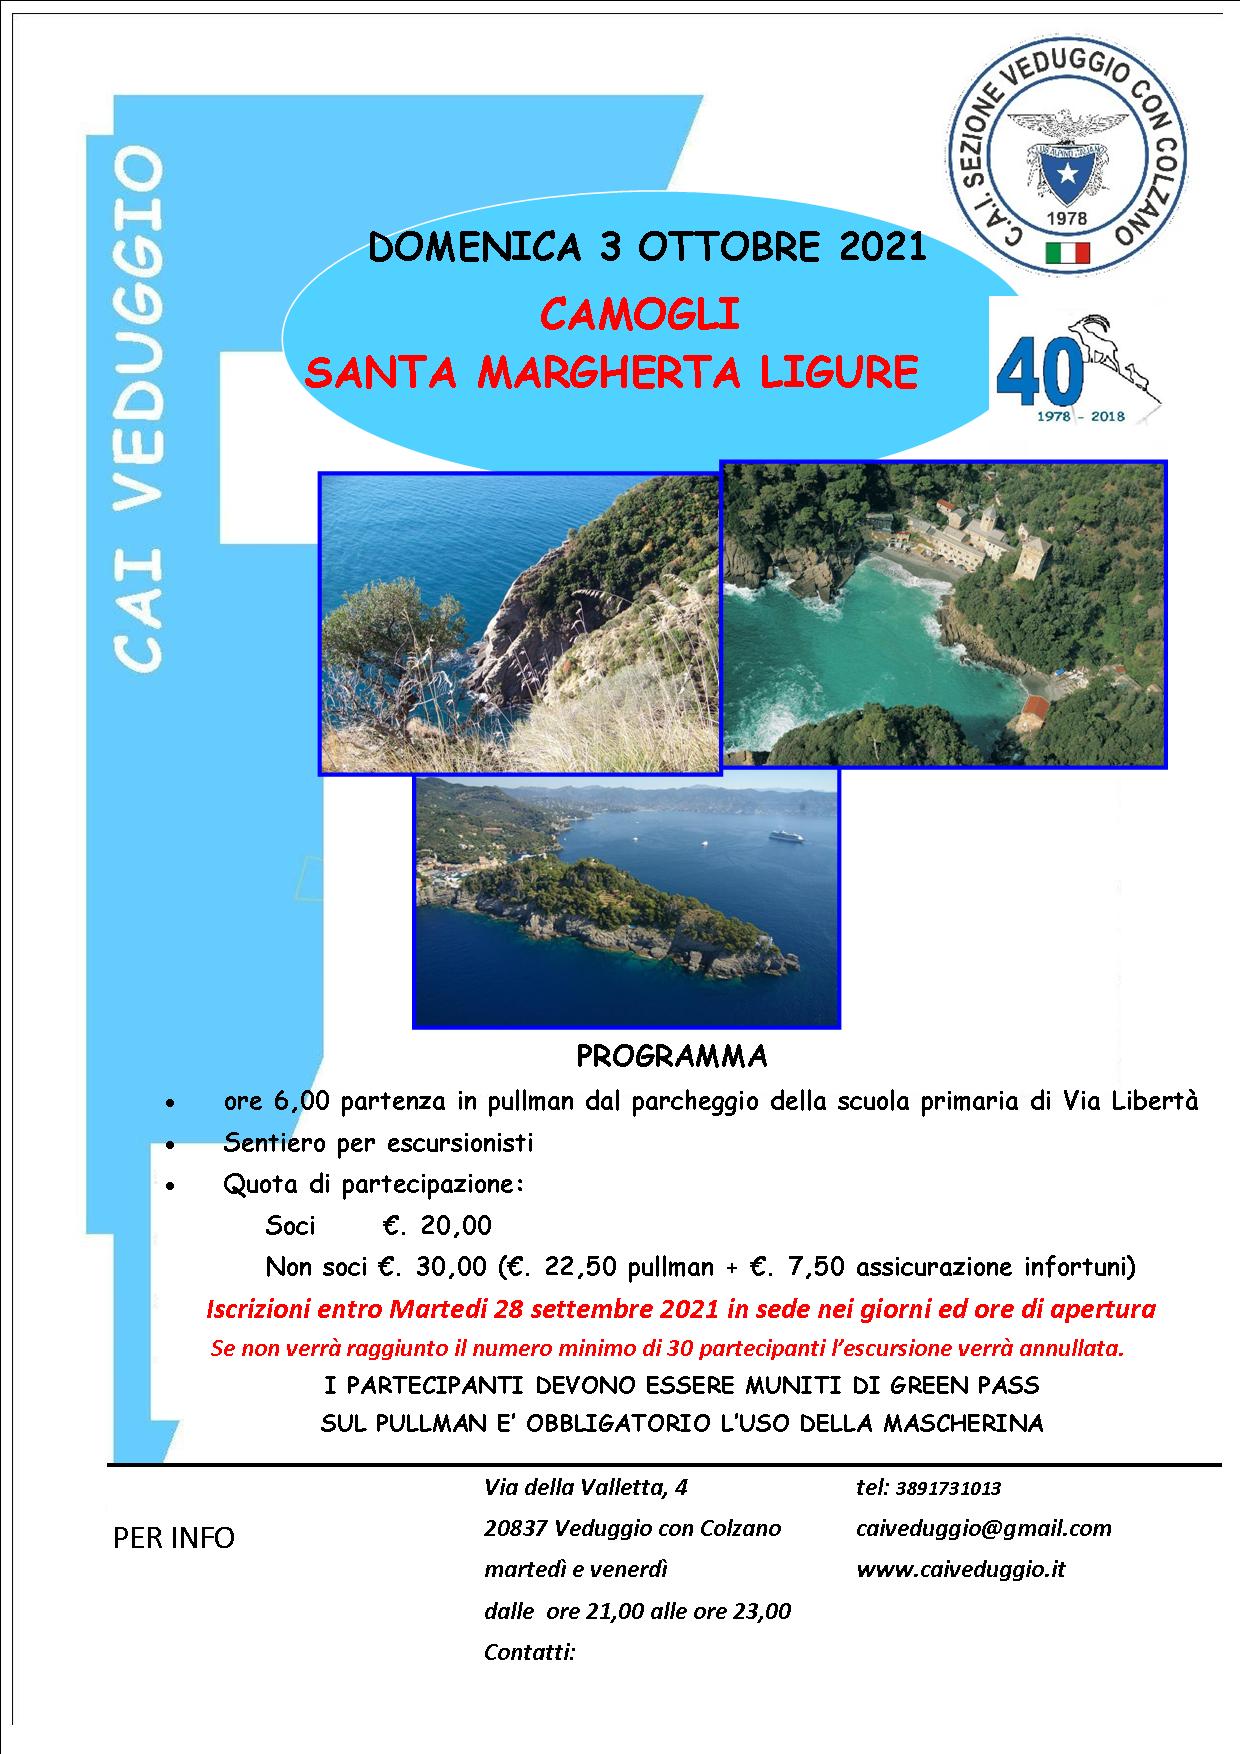 Domenica 3 ottobre 2021 – Camogli/Santa Margherita Ligure